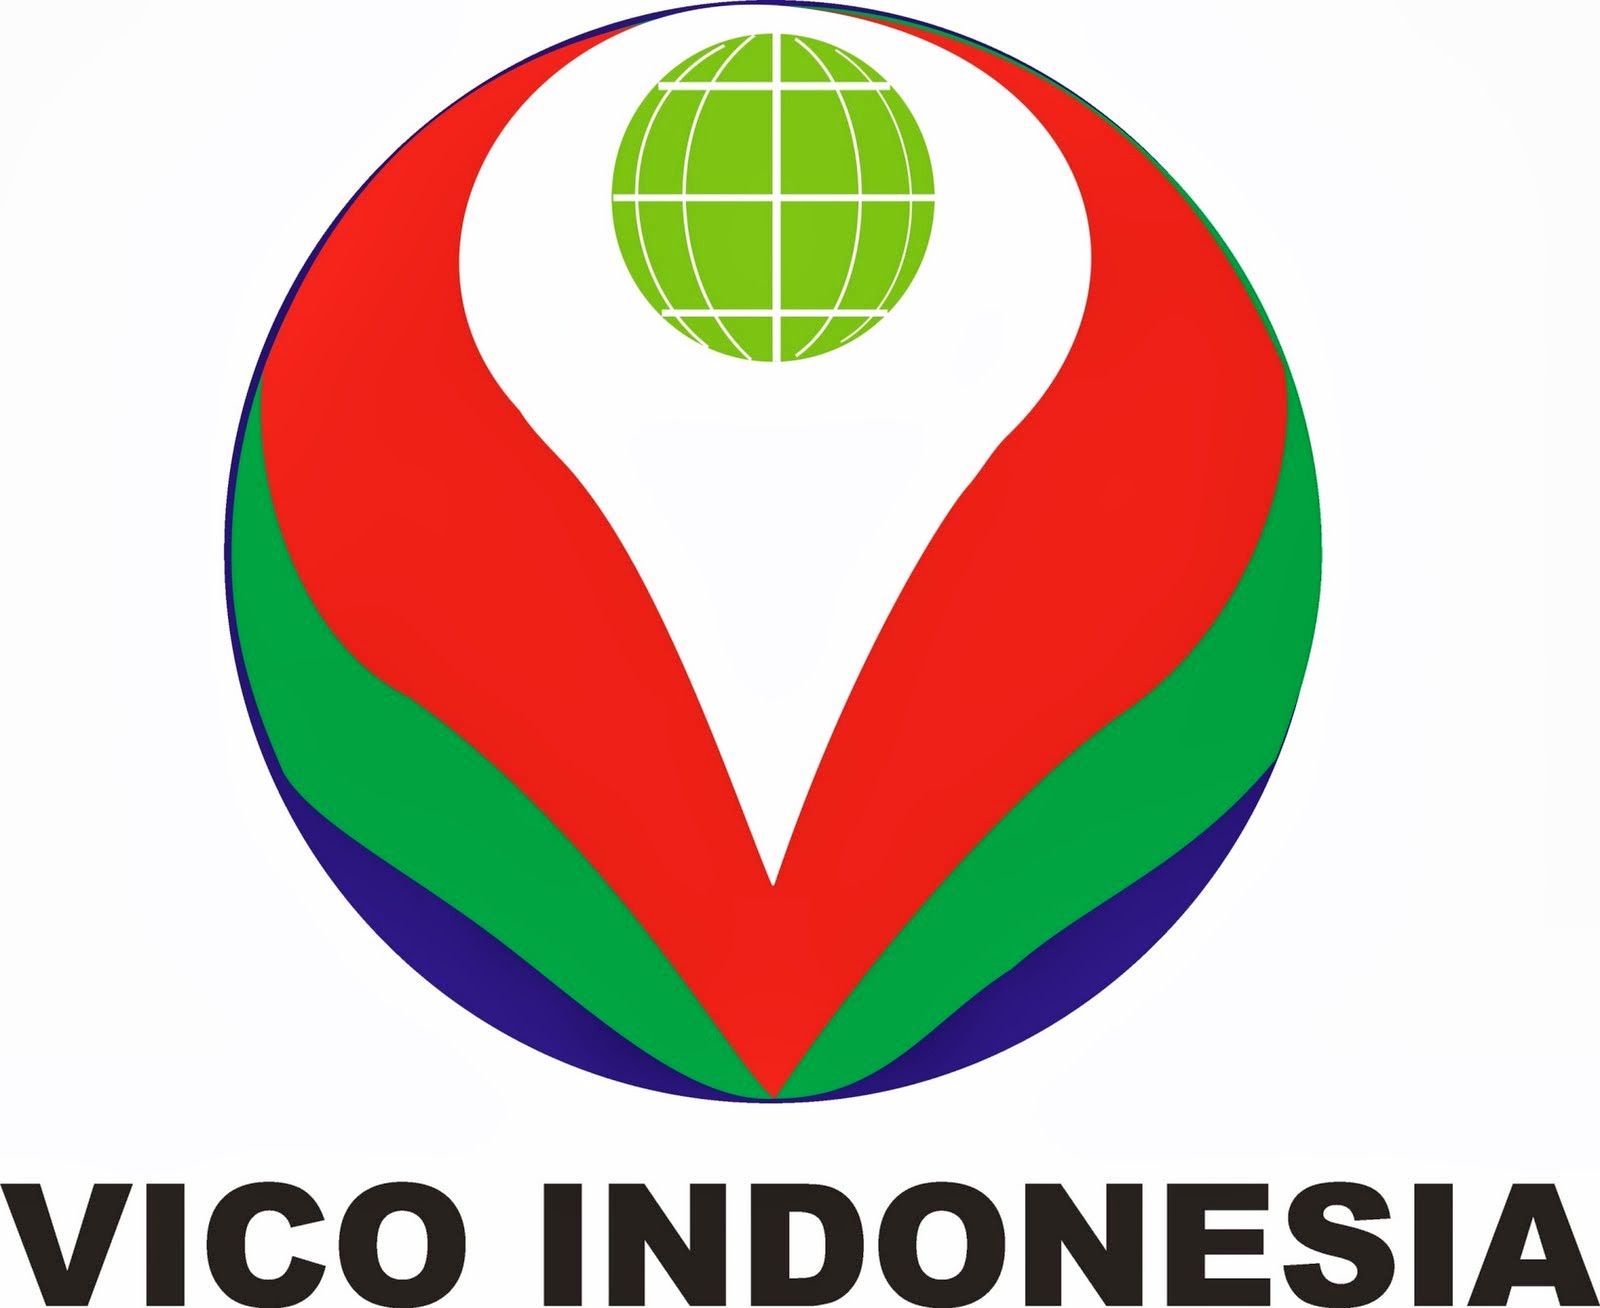  LOGO INDONESIA Gambar Logo 